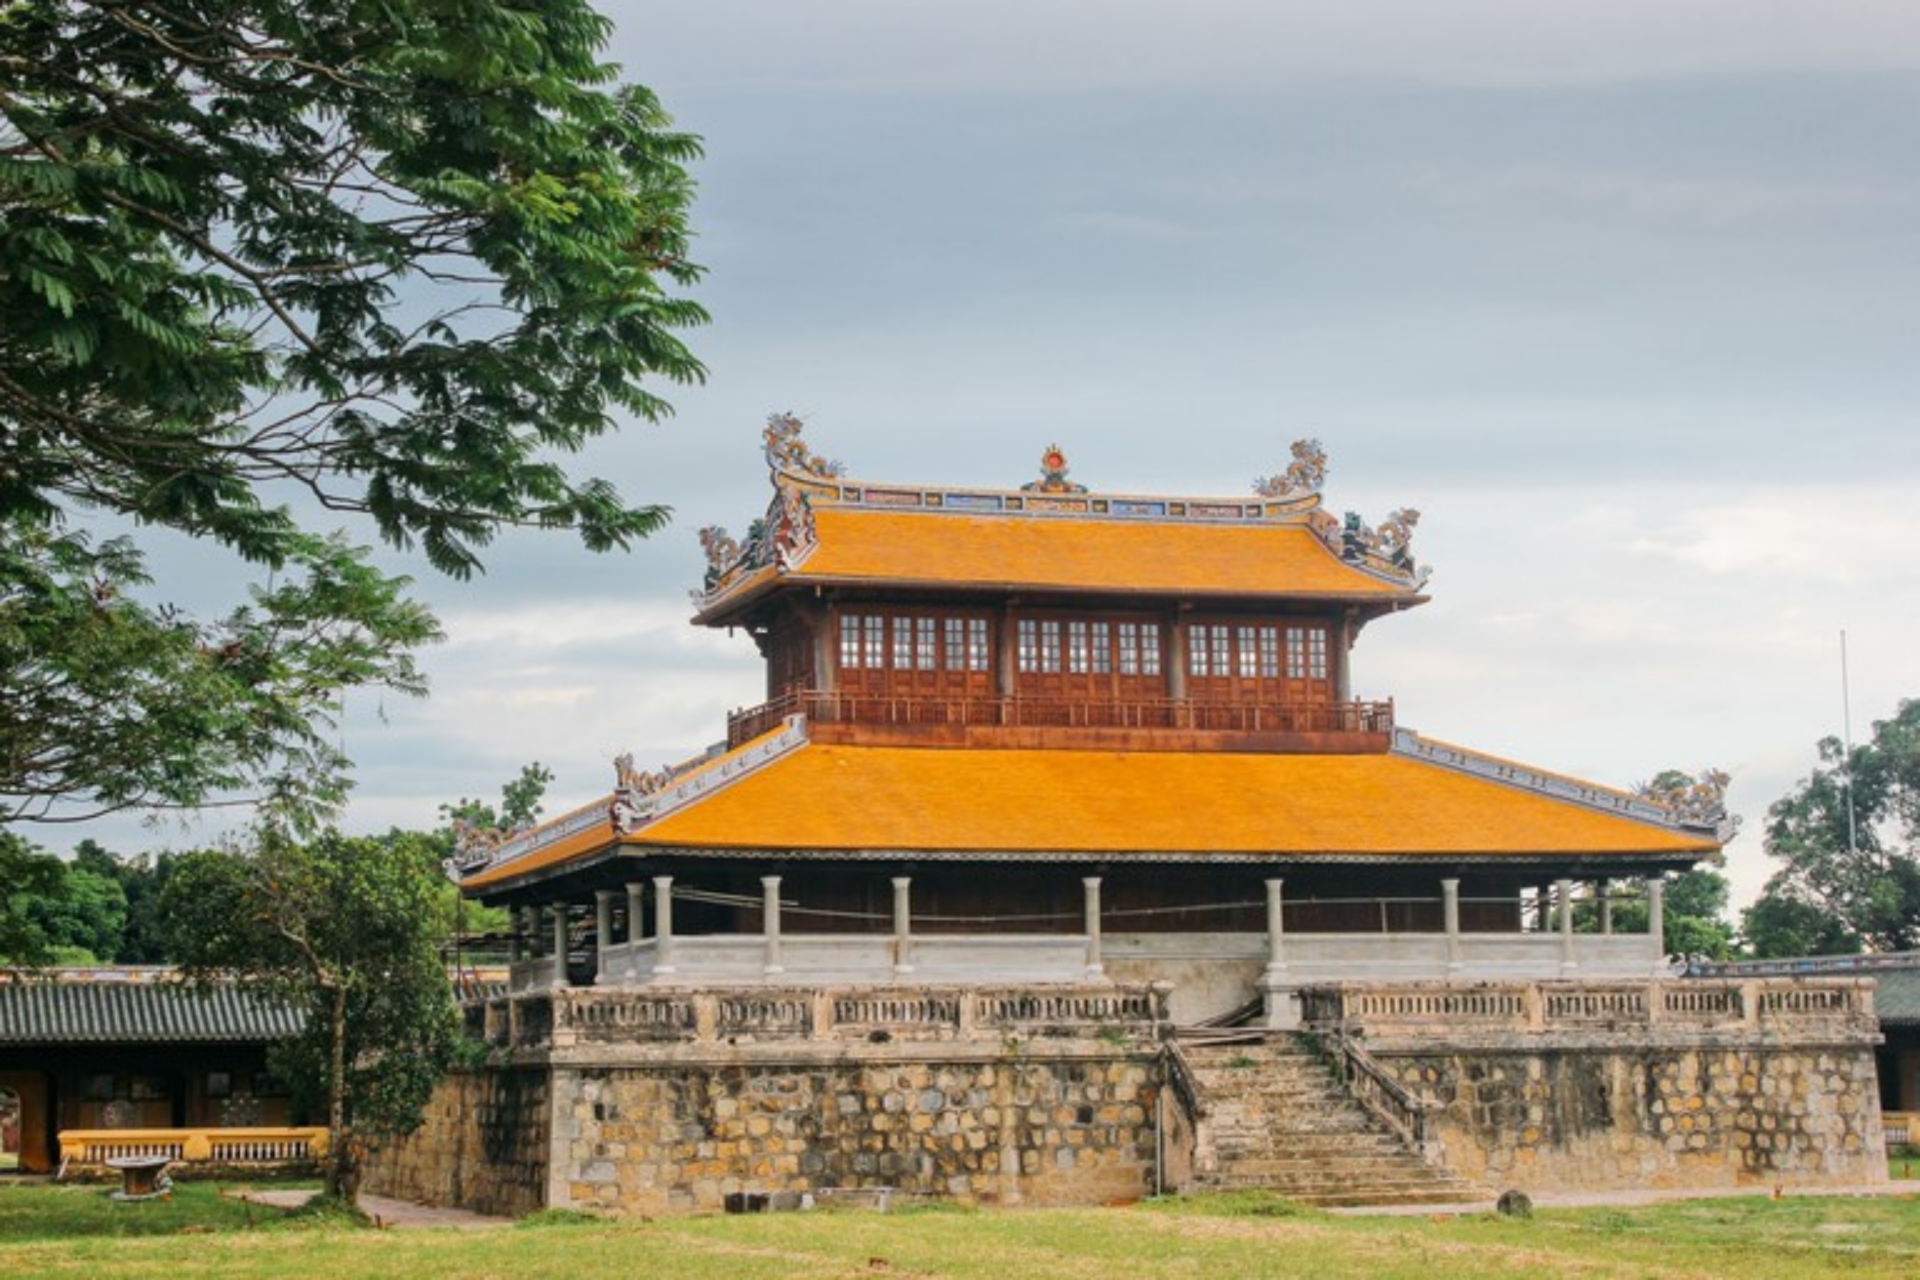 The antique beatuty of Hue Citadel